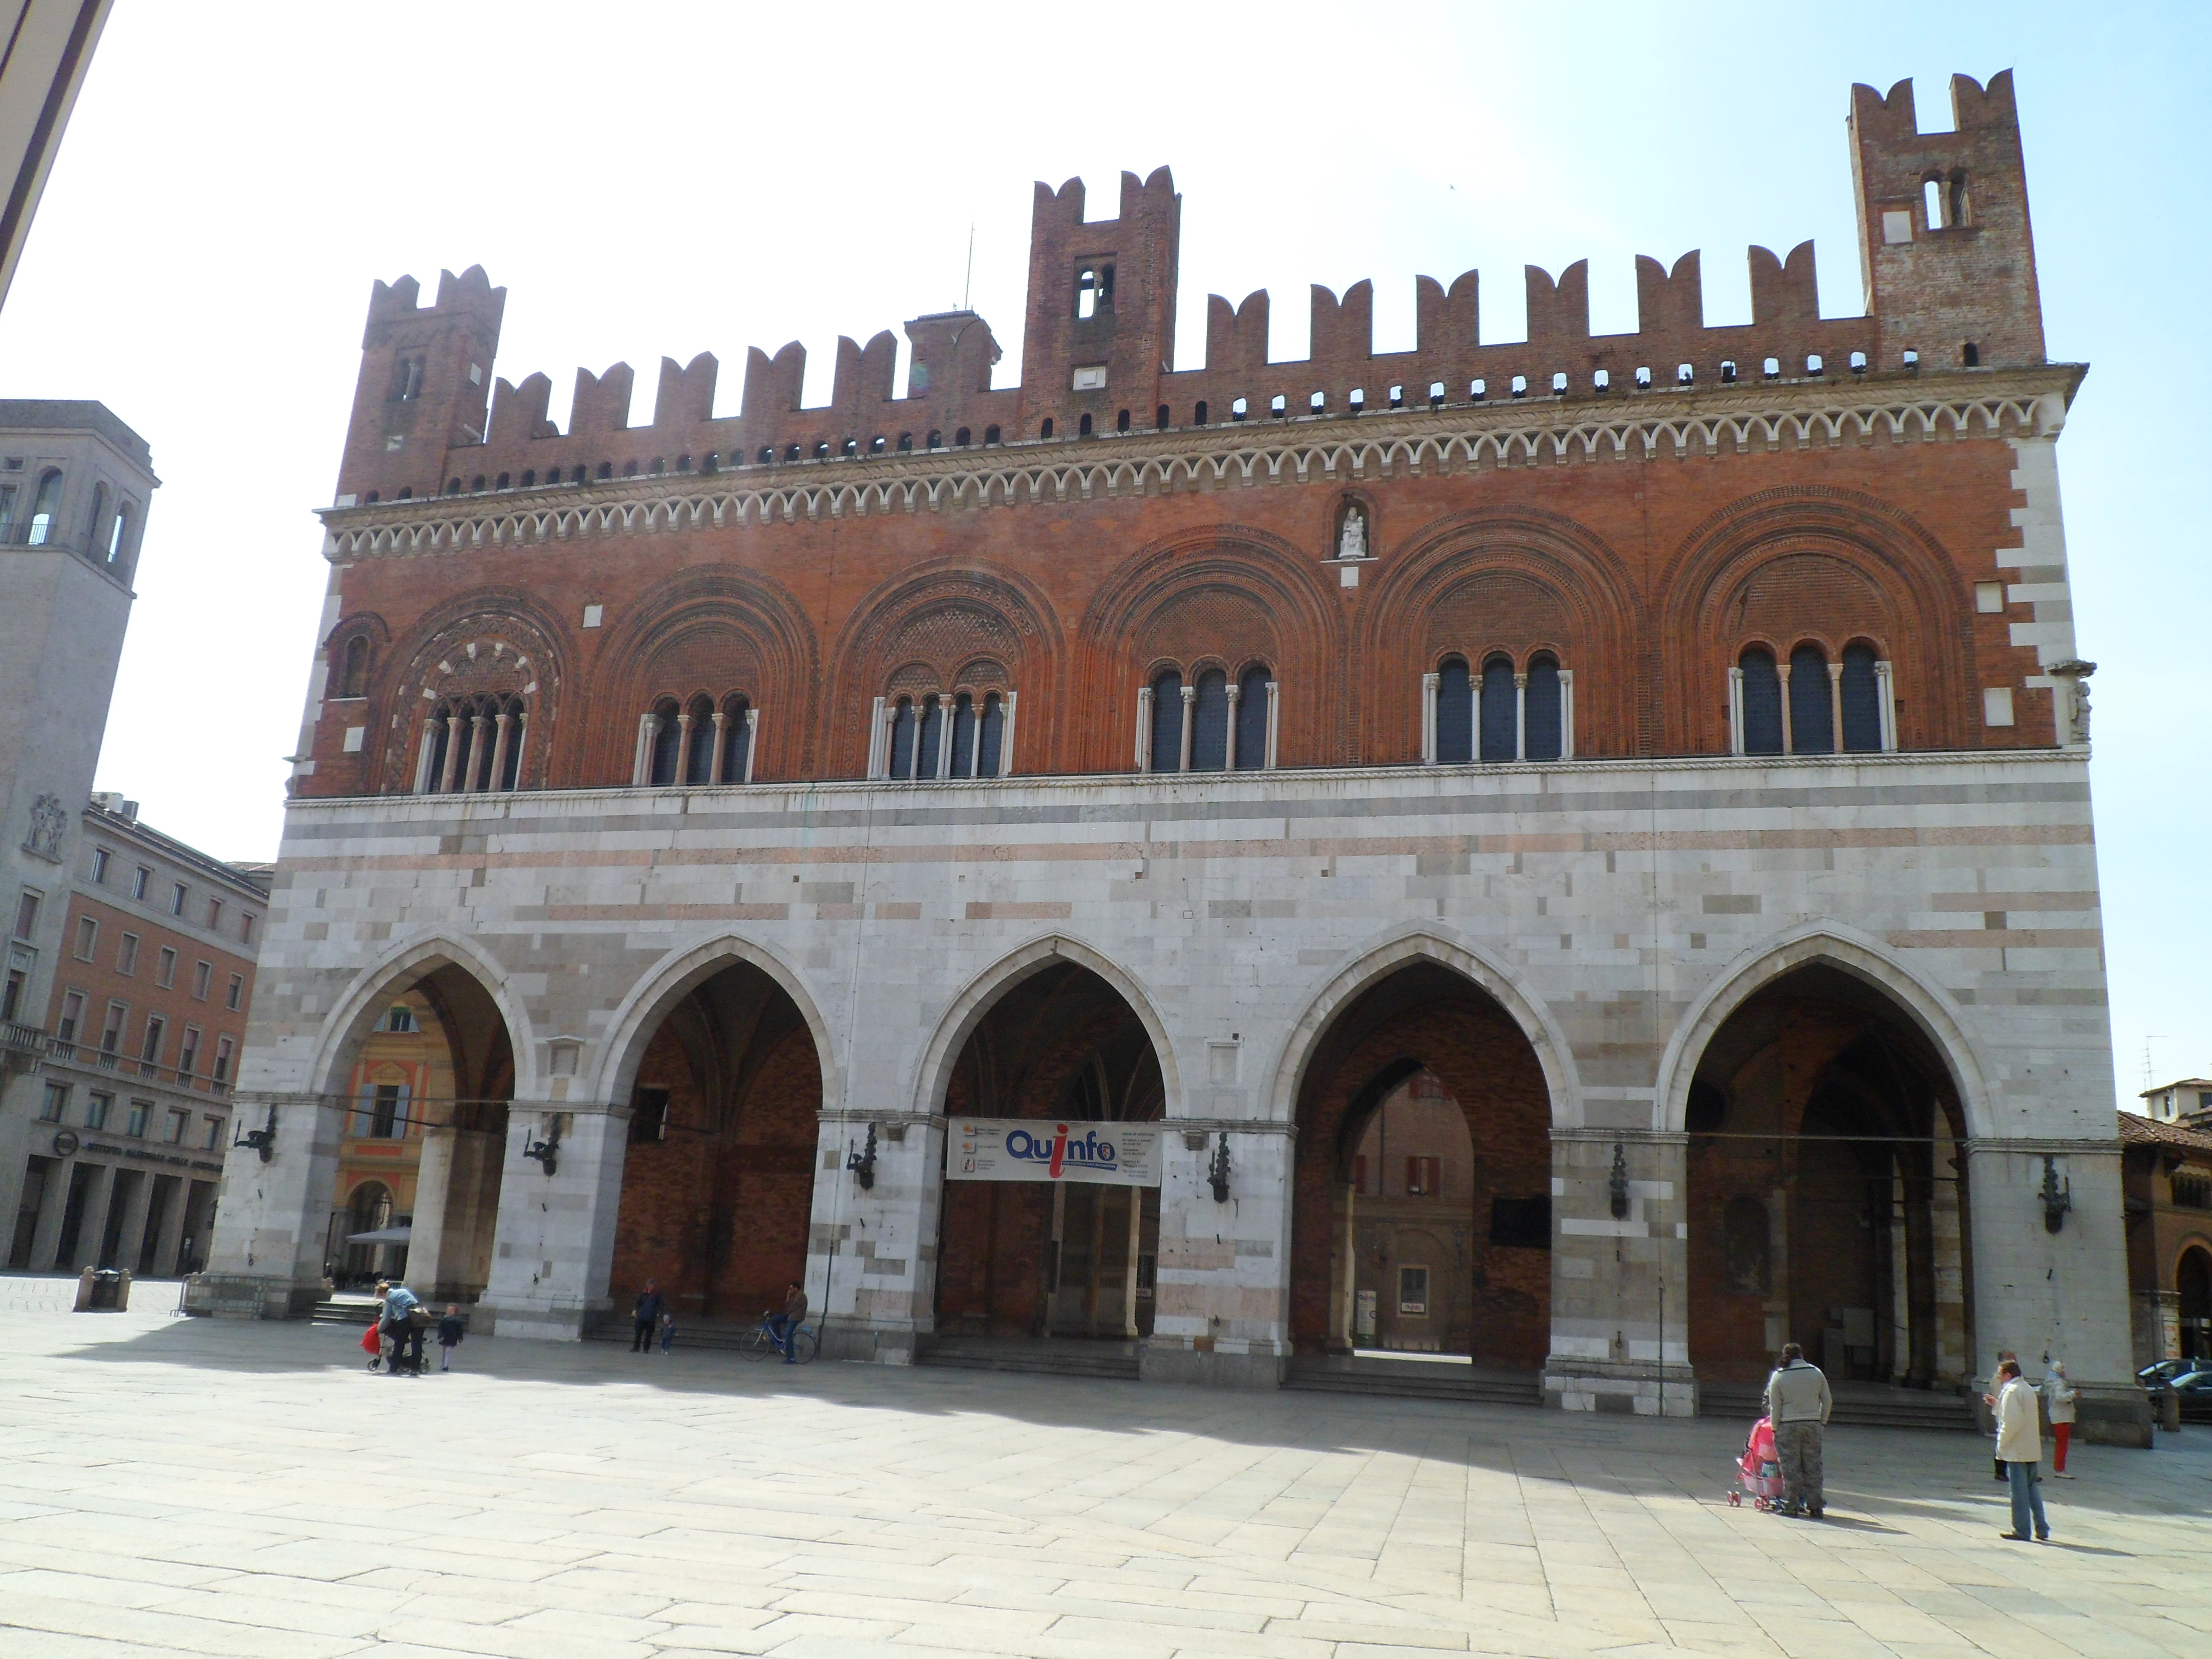 foto: https://upload.wikimedia.org/wikipedia/commons/3/36/Palazzo_gotico_fronte.JPG